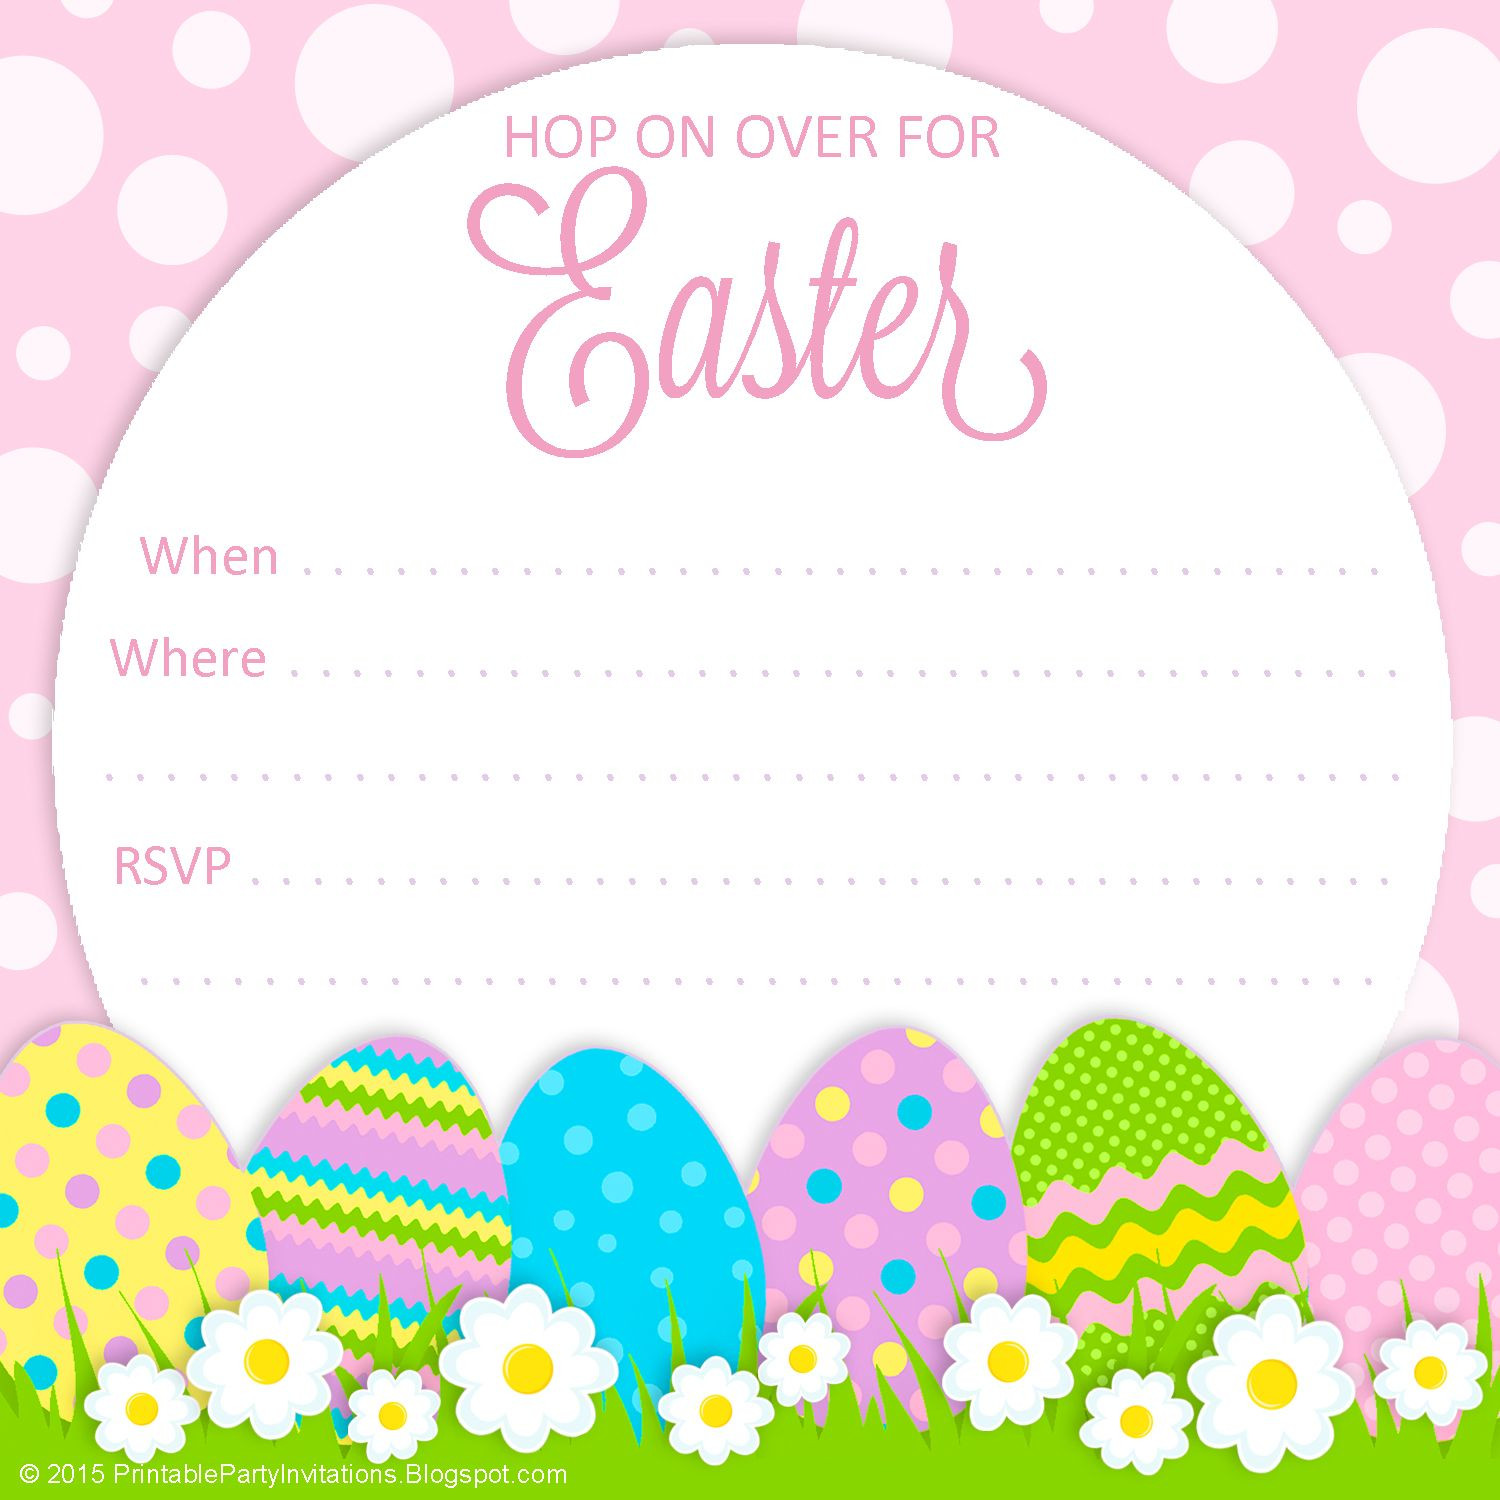 Easter Dinner Invitations
 FREE Easter party invitation for Easter egg hunts or